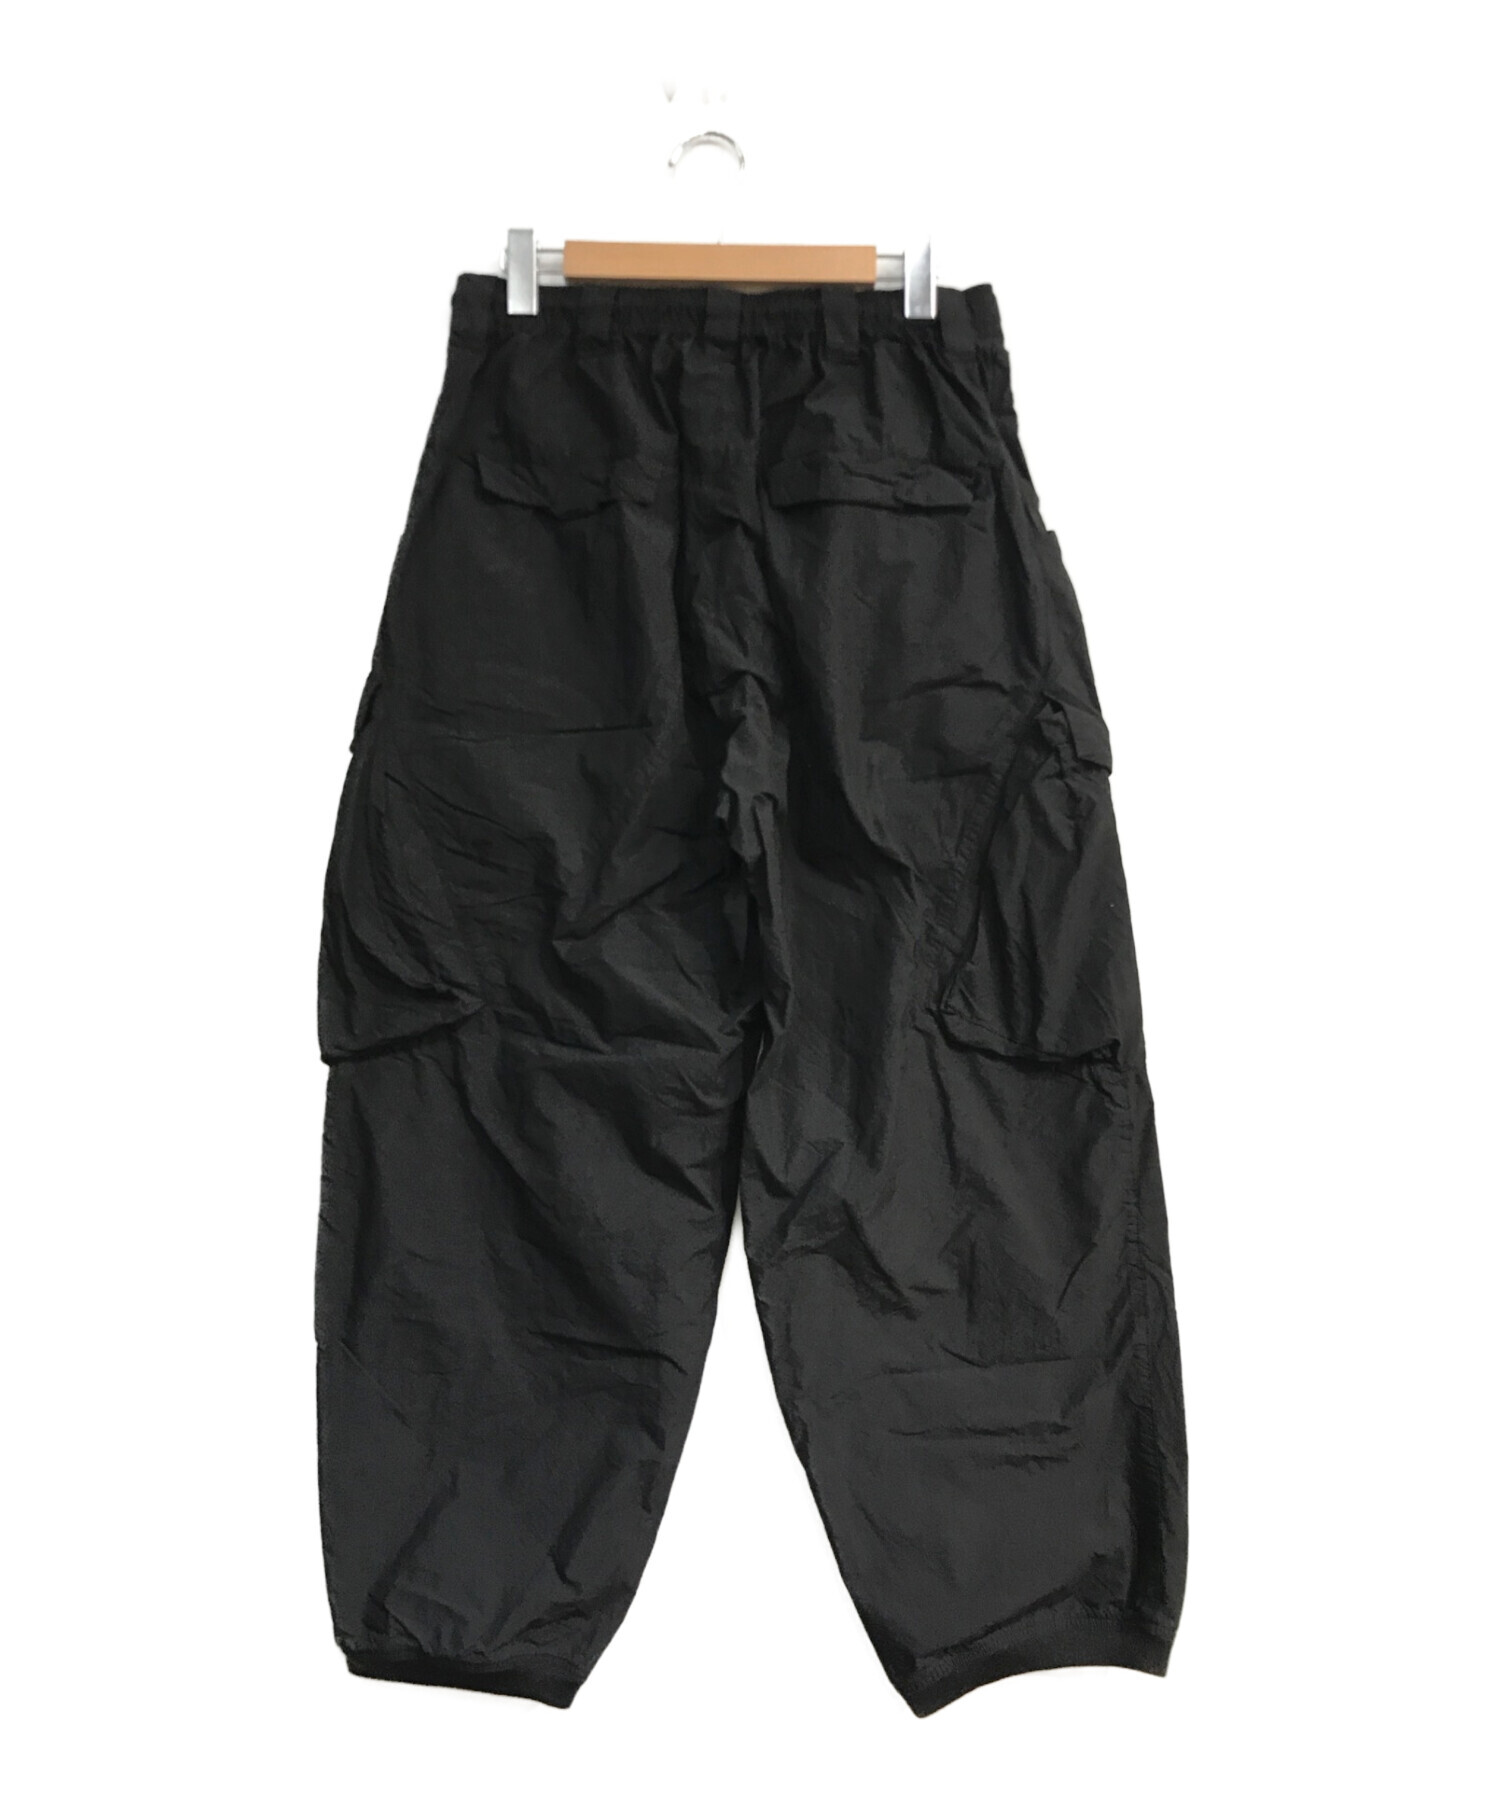 mout recon tailor (マウトリーコンテーラー) SUMMERWEIGHT MDU PANTS GEN II ブラック サイズ:48